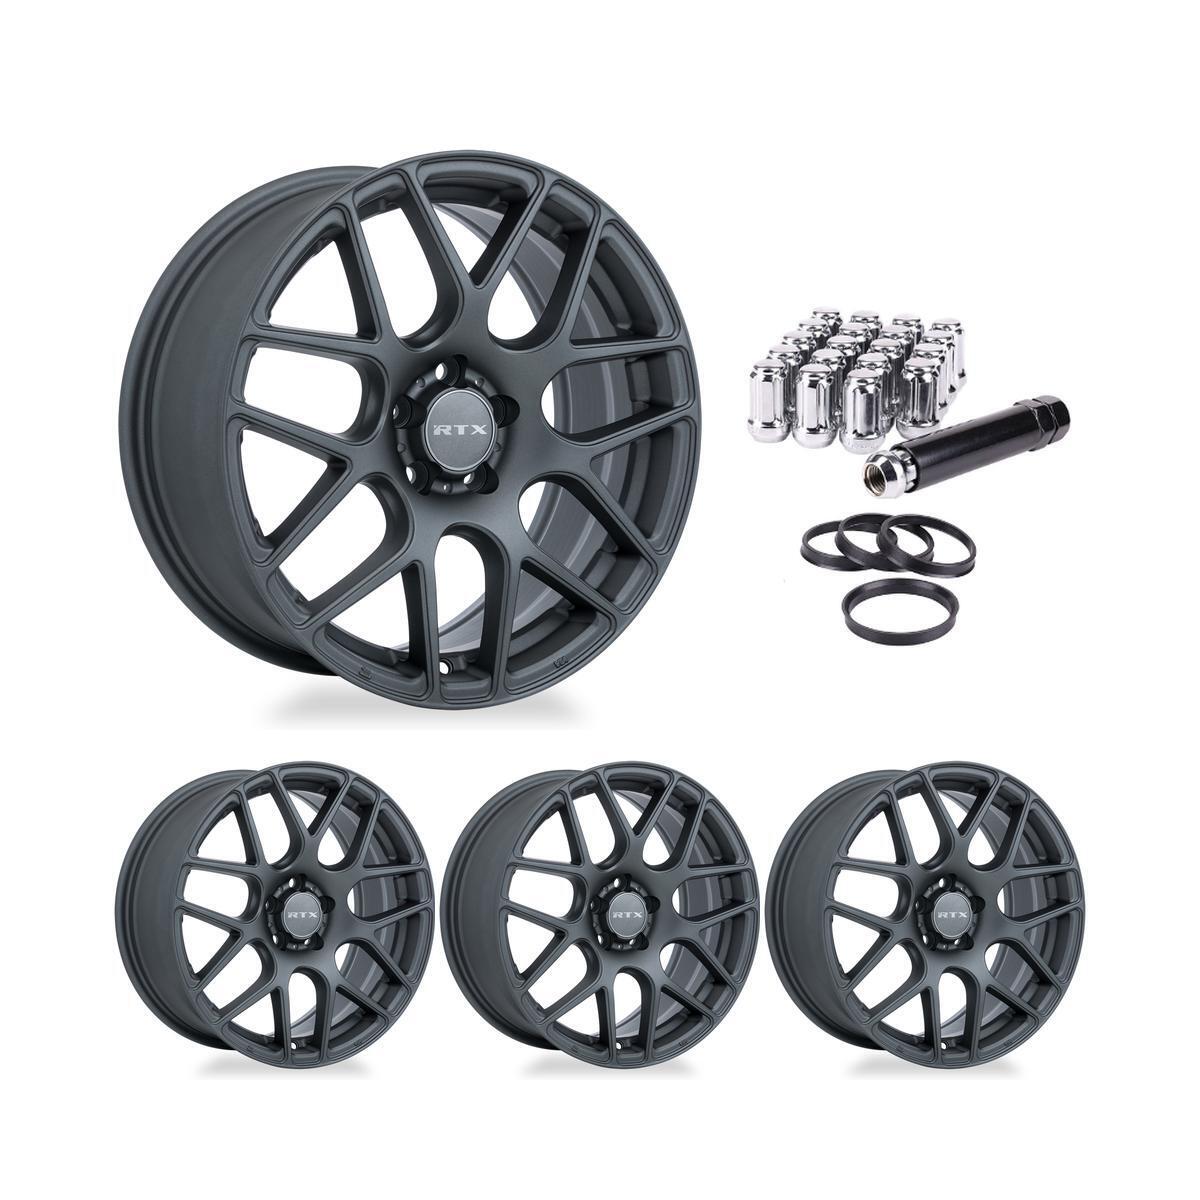 Wheel Rims Set with Chrome Lug Nuts Kit for 95-05 Pontiac Sunfire P889413 16 inc